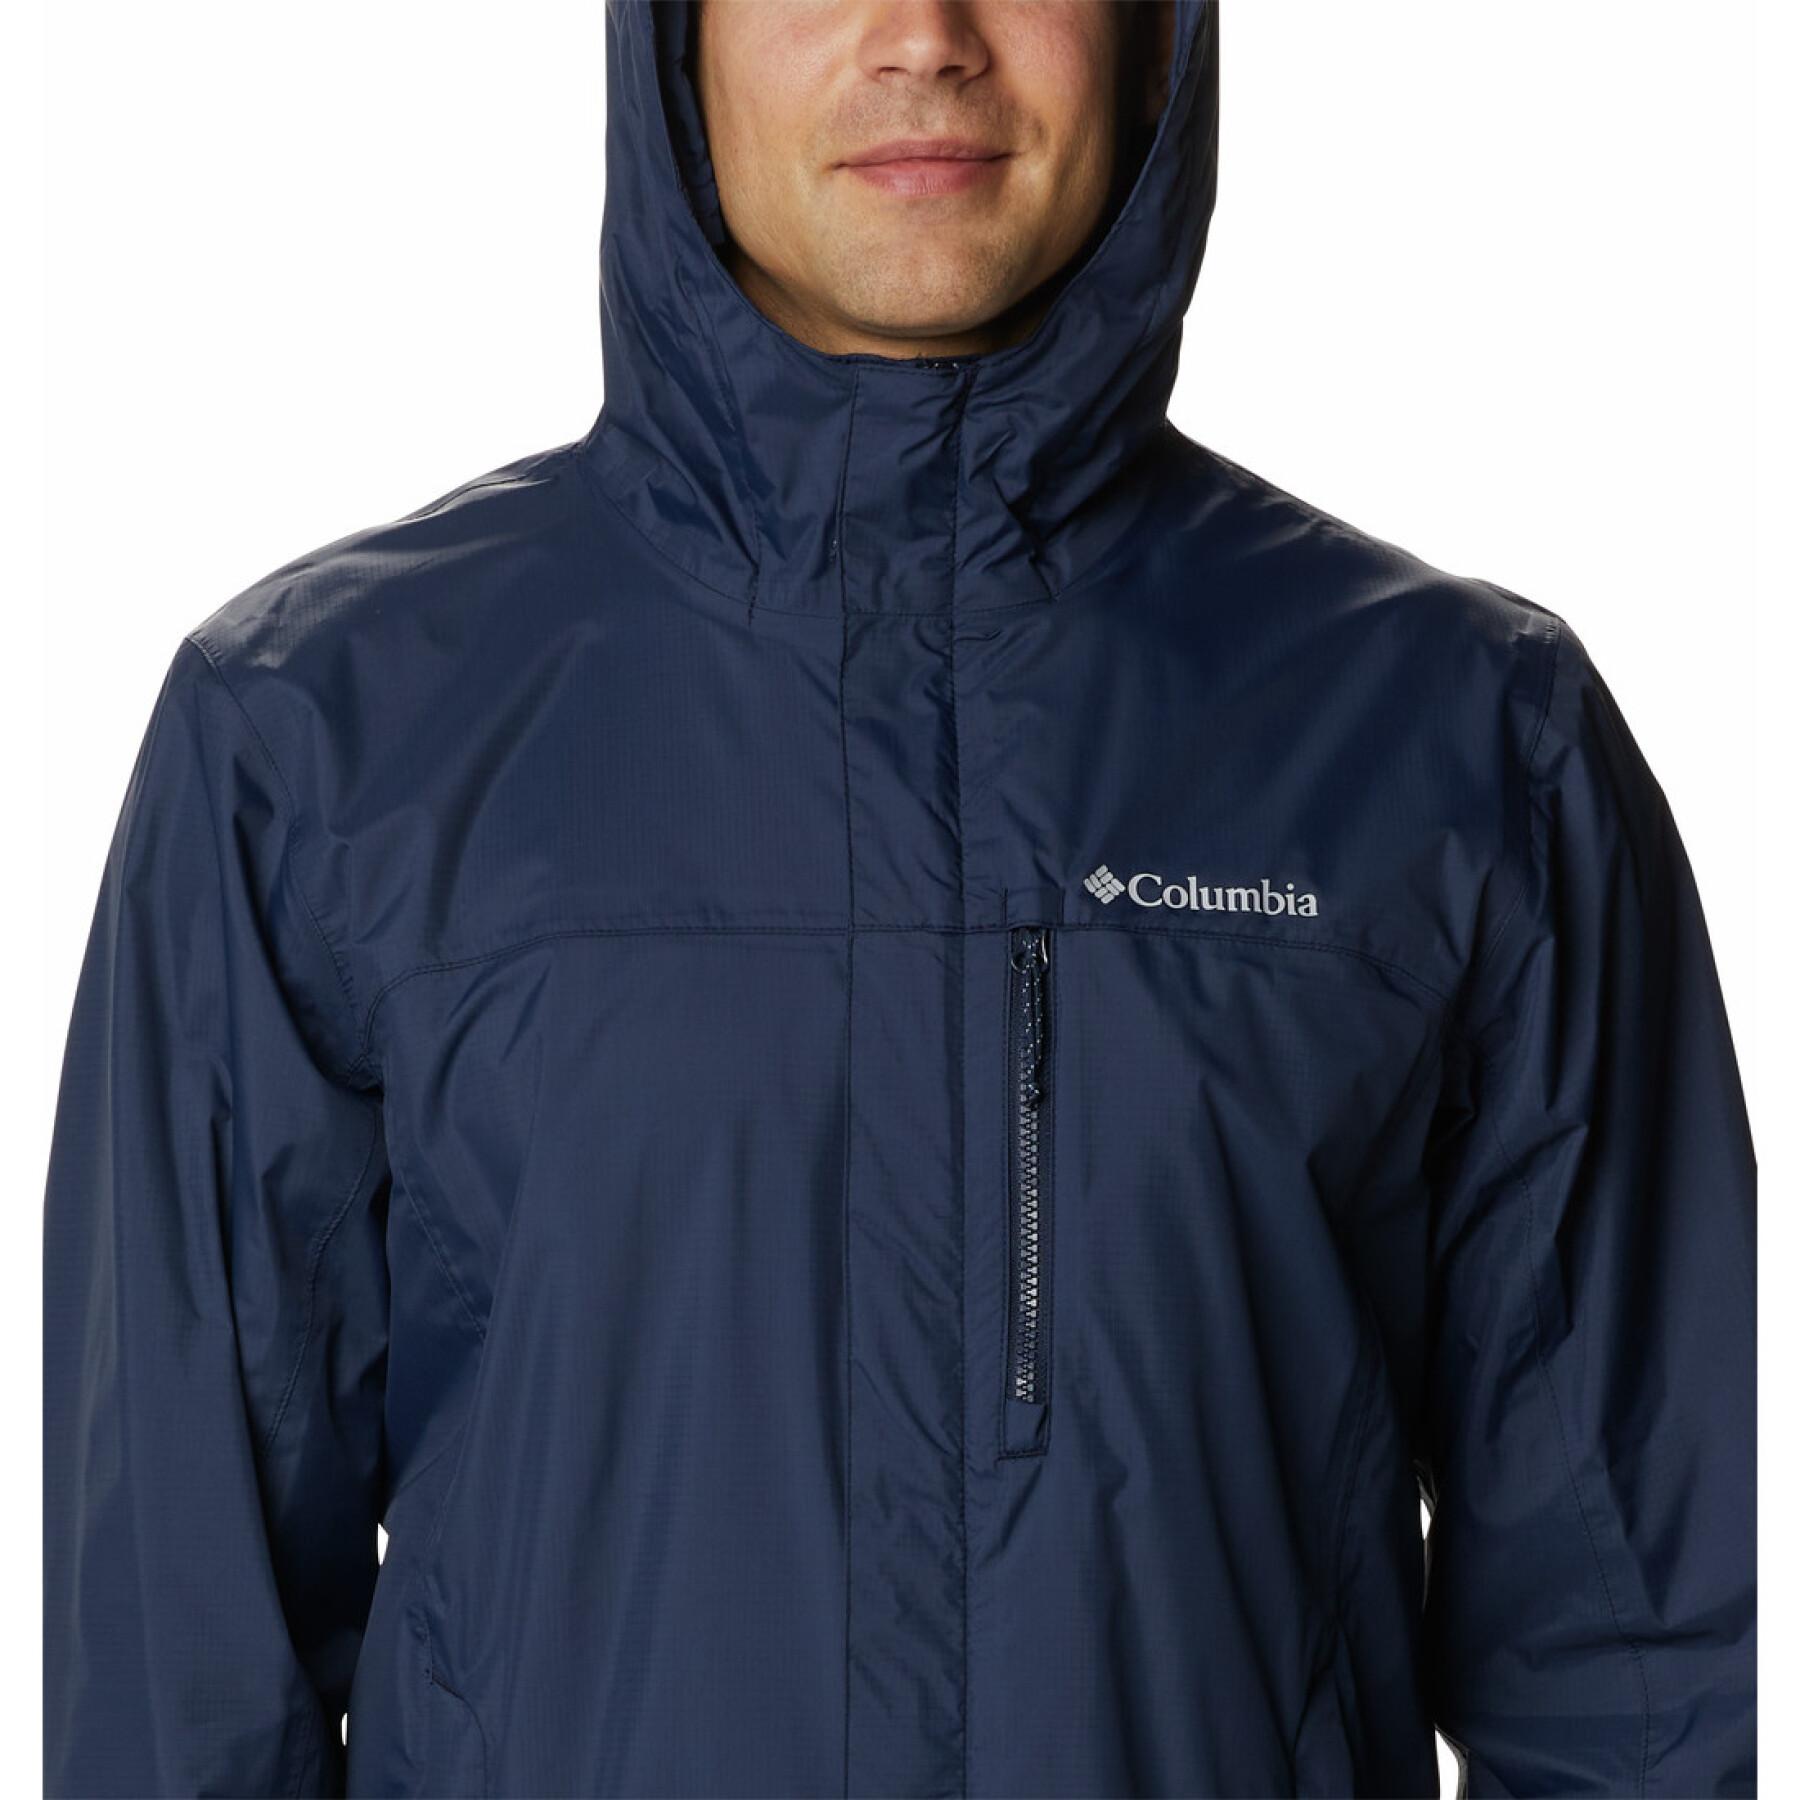 Waterproof jacket Columbia Pouring Adventure II